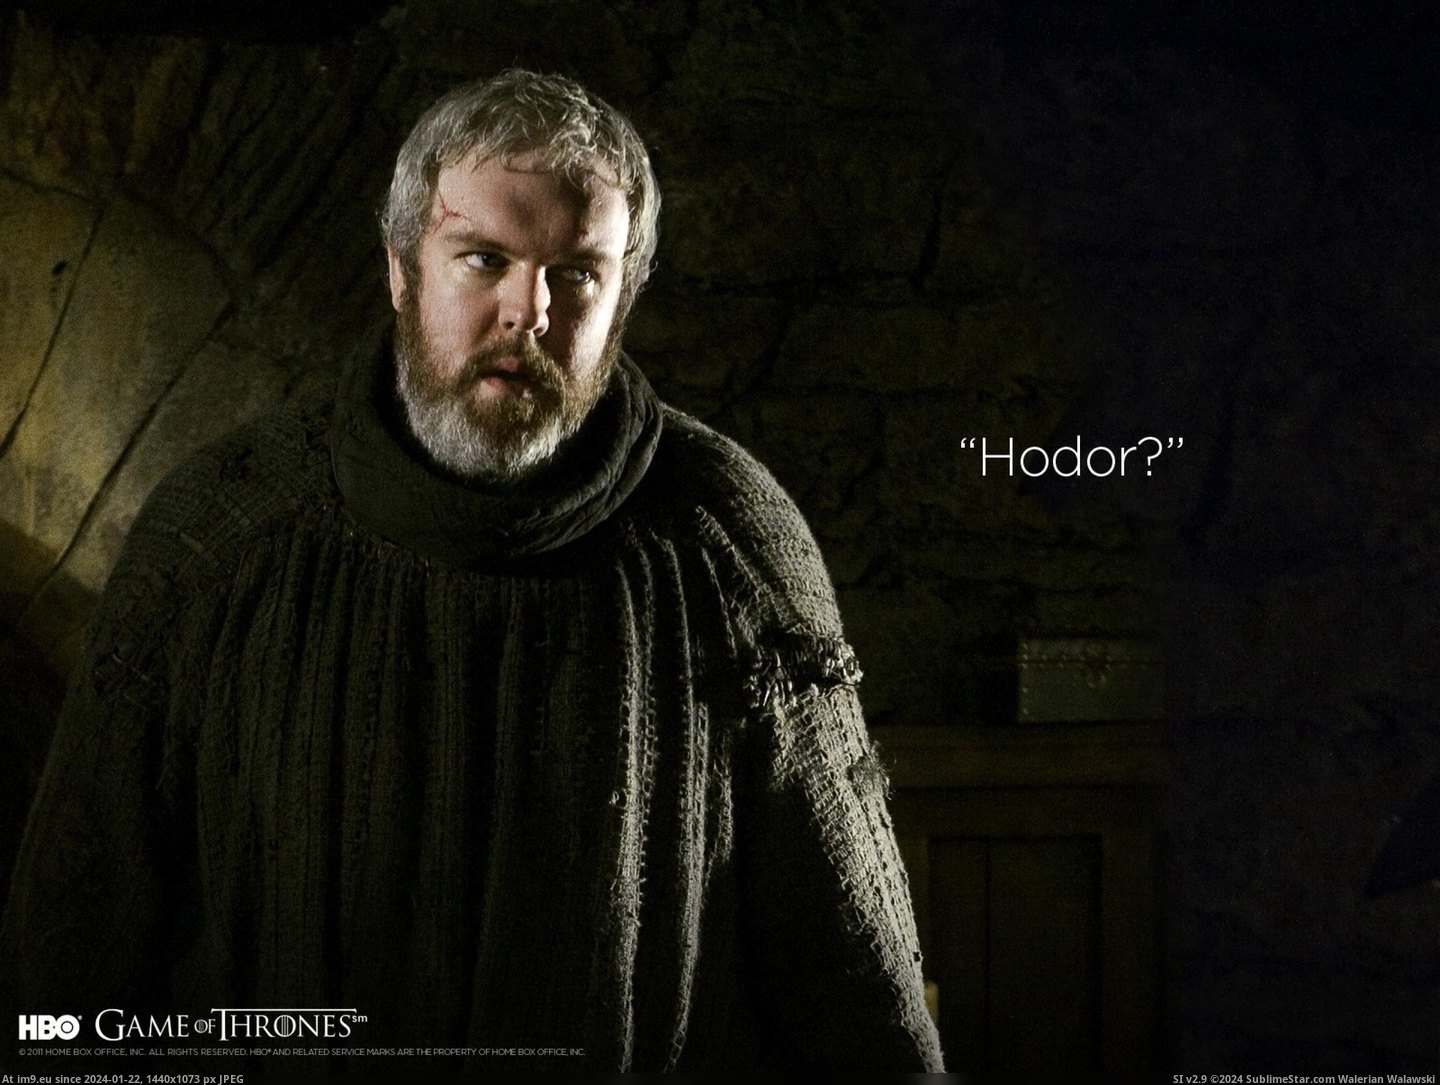  #Hodor  Hodor Pic. (Bild von album Game of Thrones ART (A Song of Ice and Fire)))